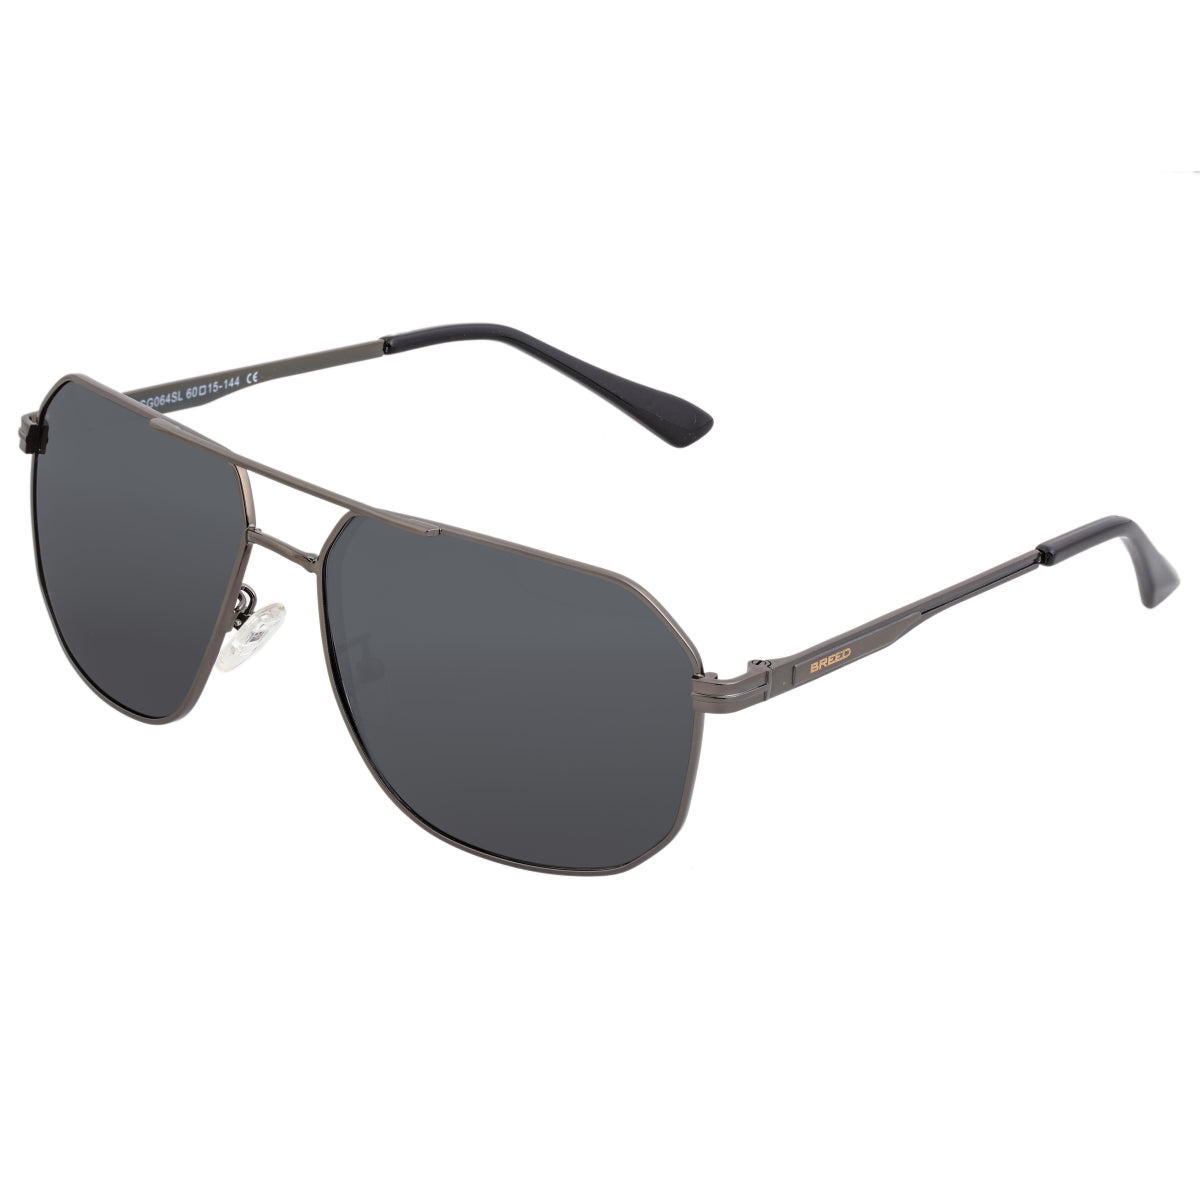 Breed Norma Polarized Sunglasses - Gunmetal/Black - BSG064SL